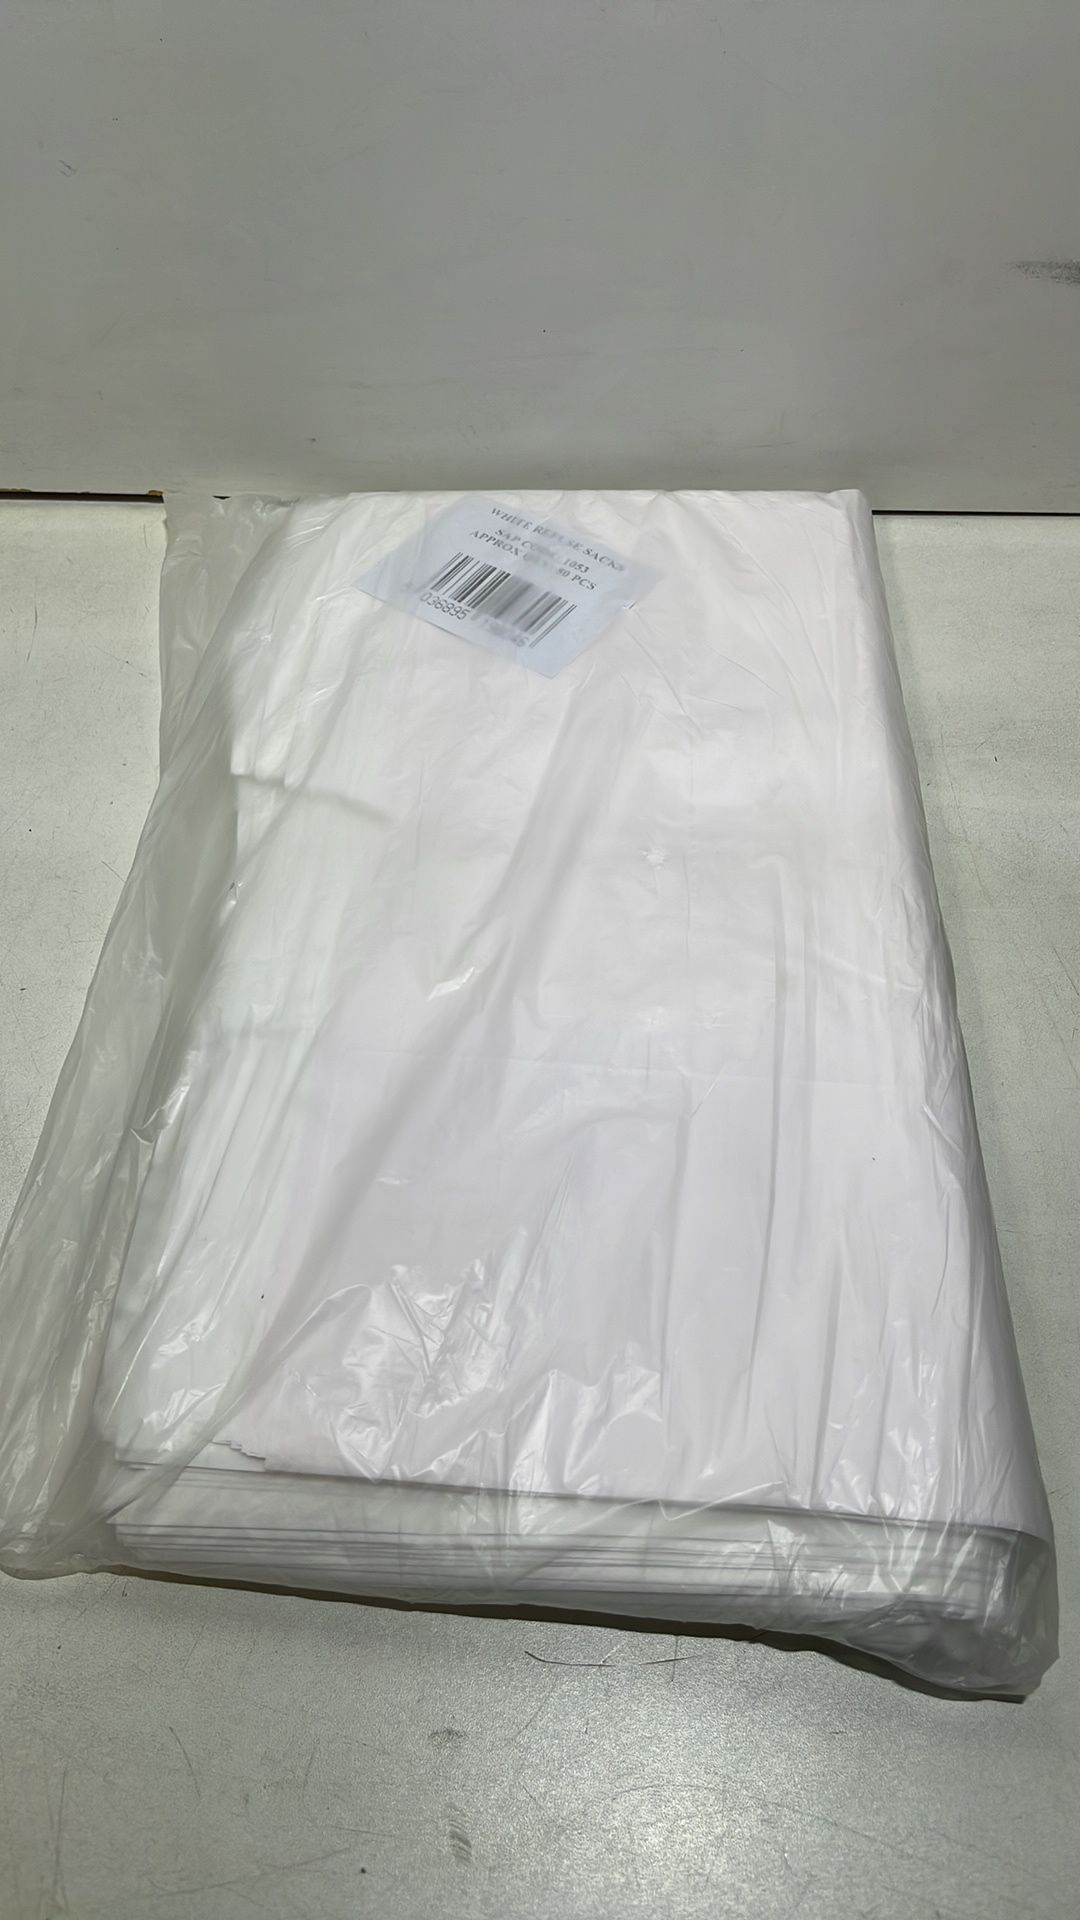 4 x Bags of White Refuse Bags | Qty 50 per Bag